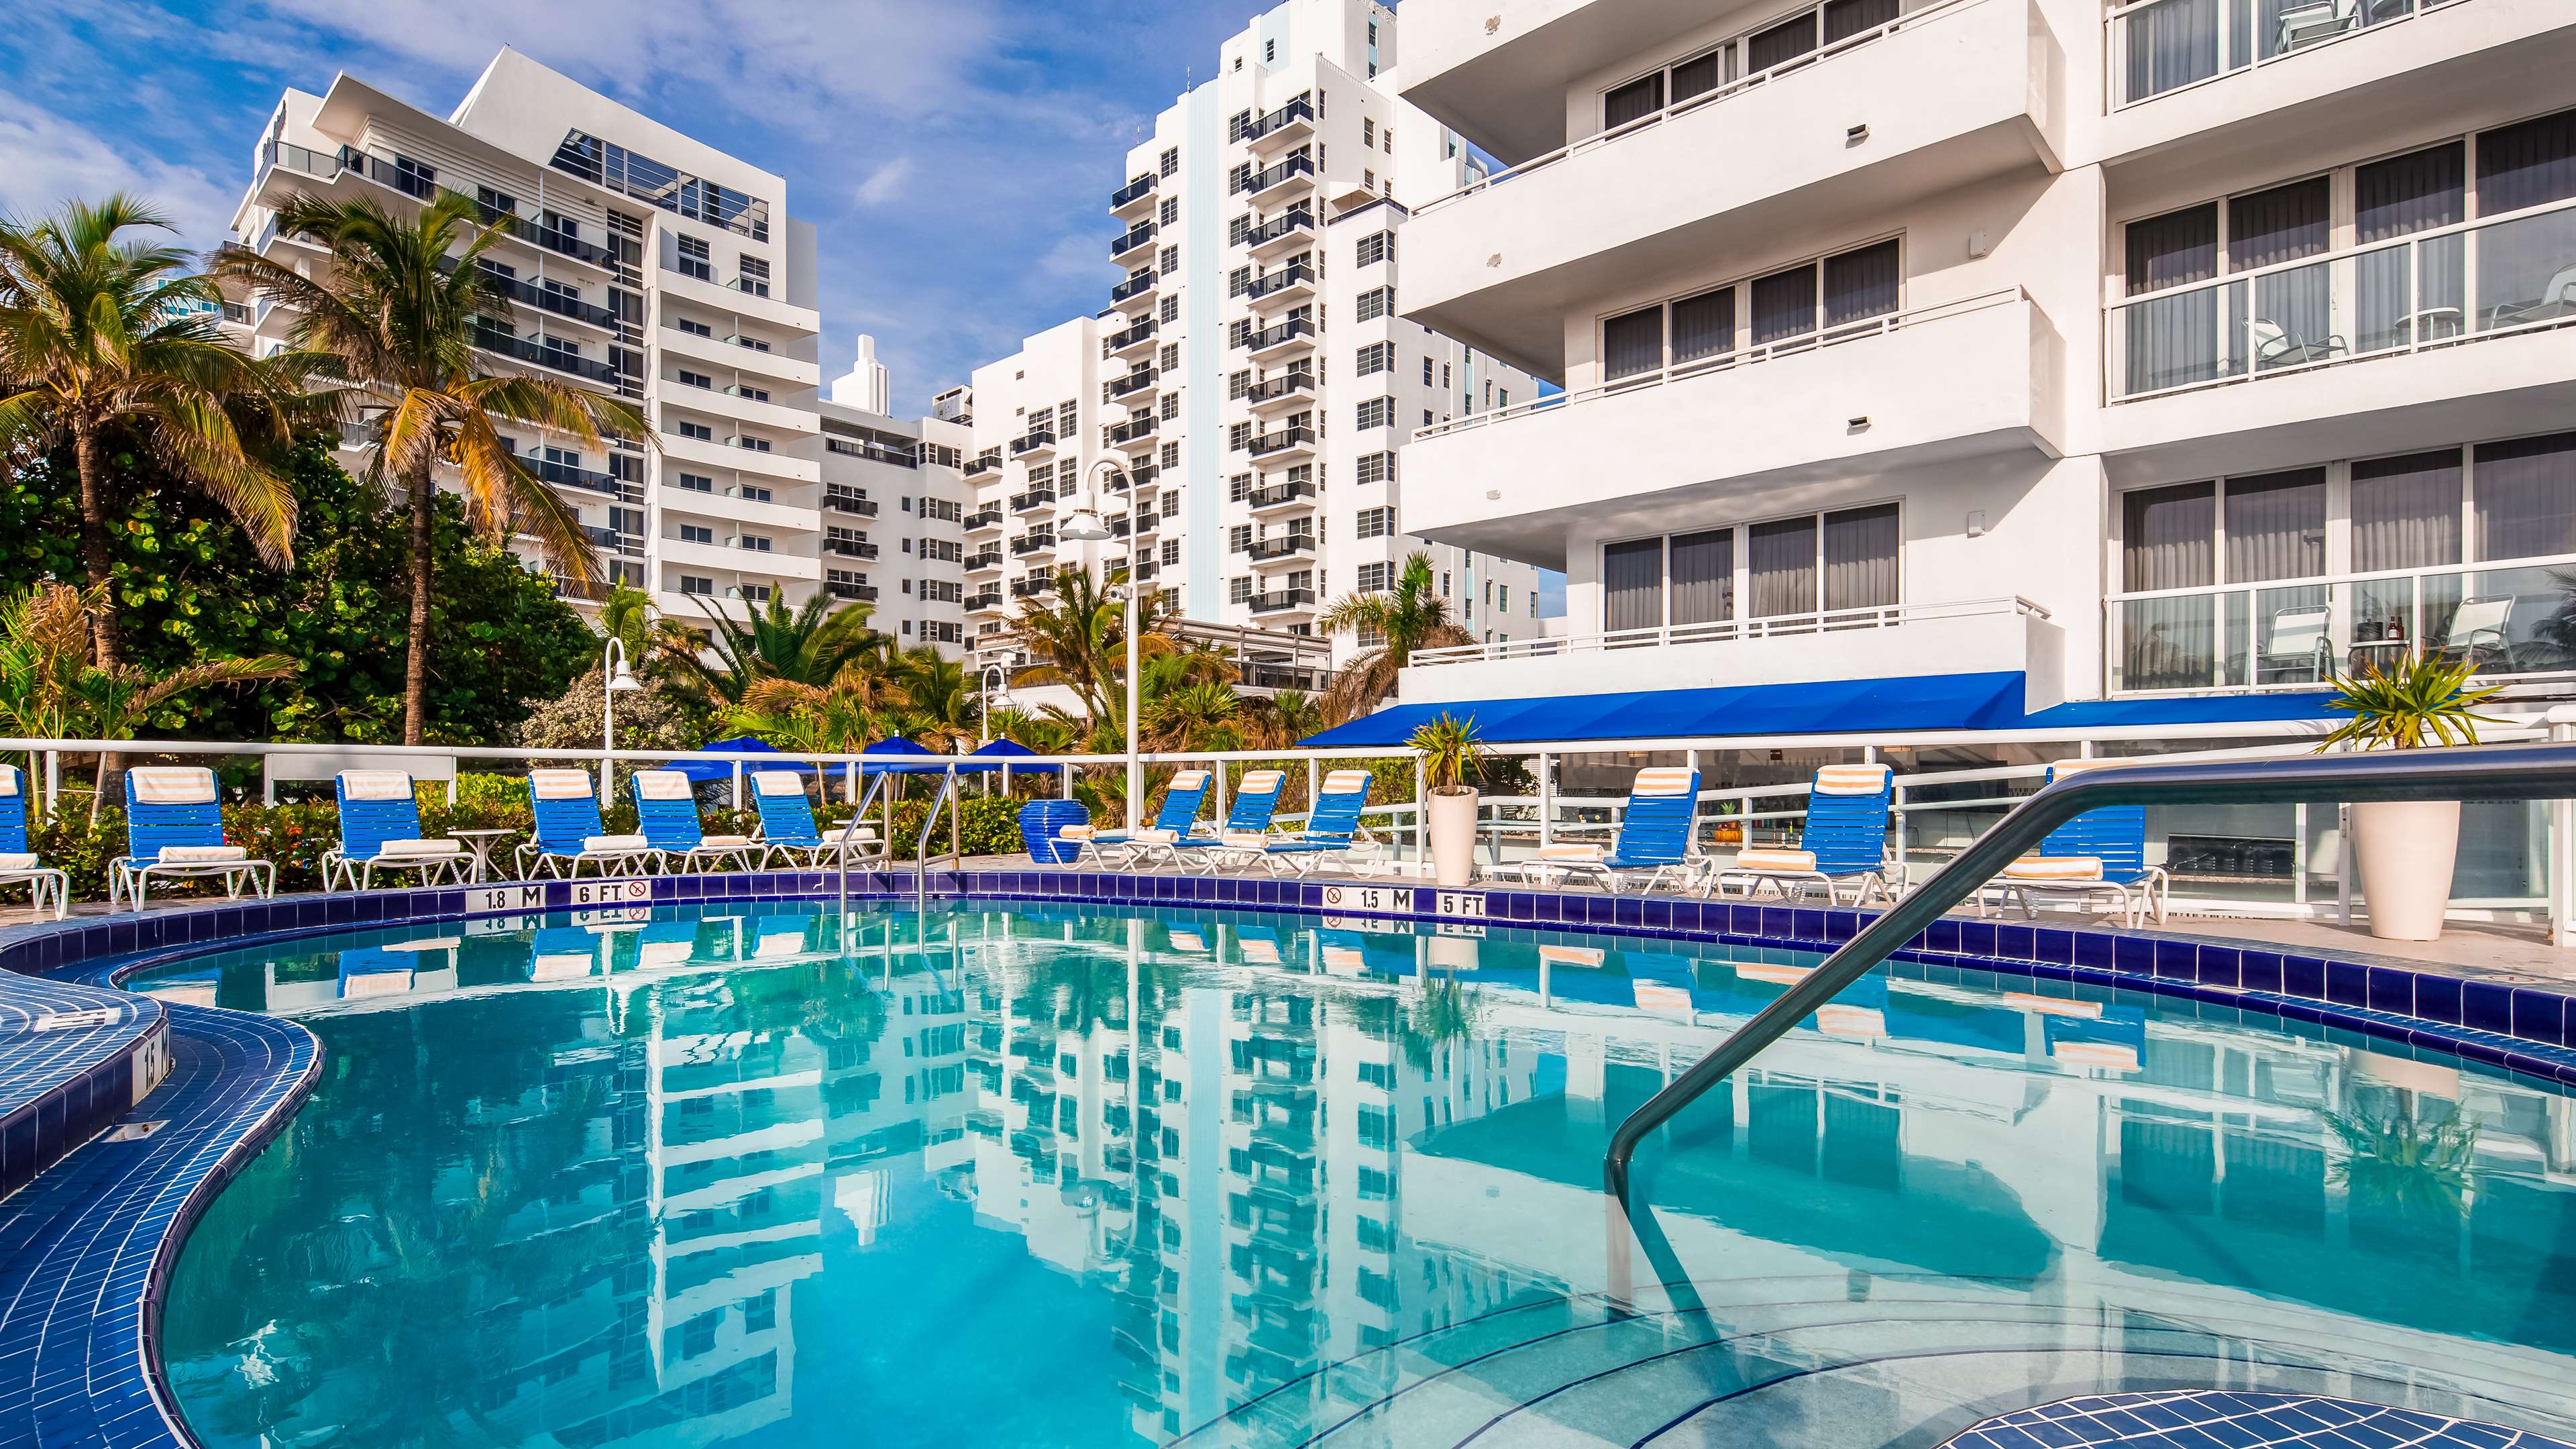 Best Western Plus Atlantic Beach Resort in Miami Beach, FL - (305) 673-3337